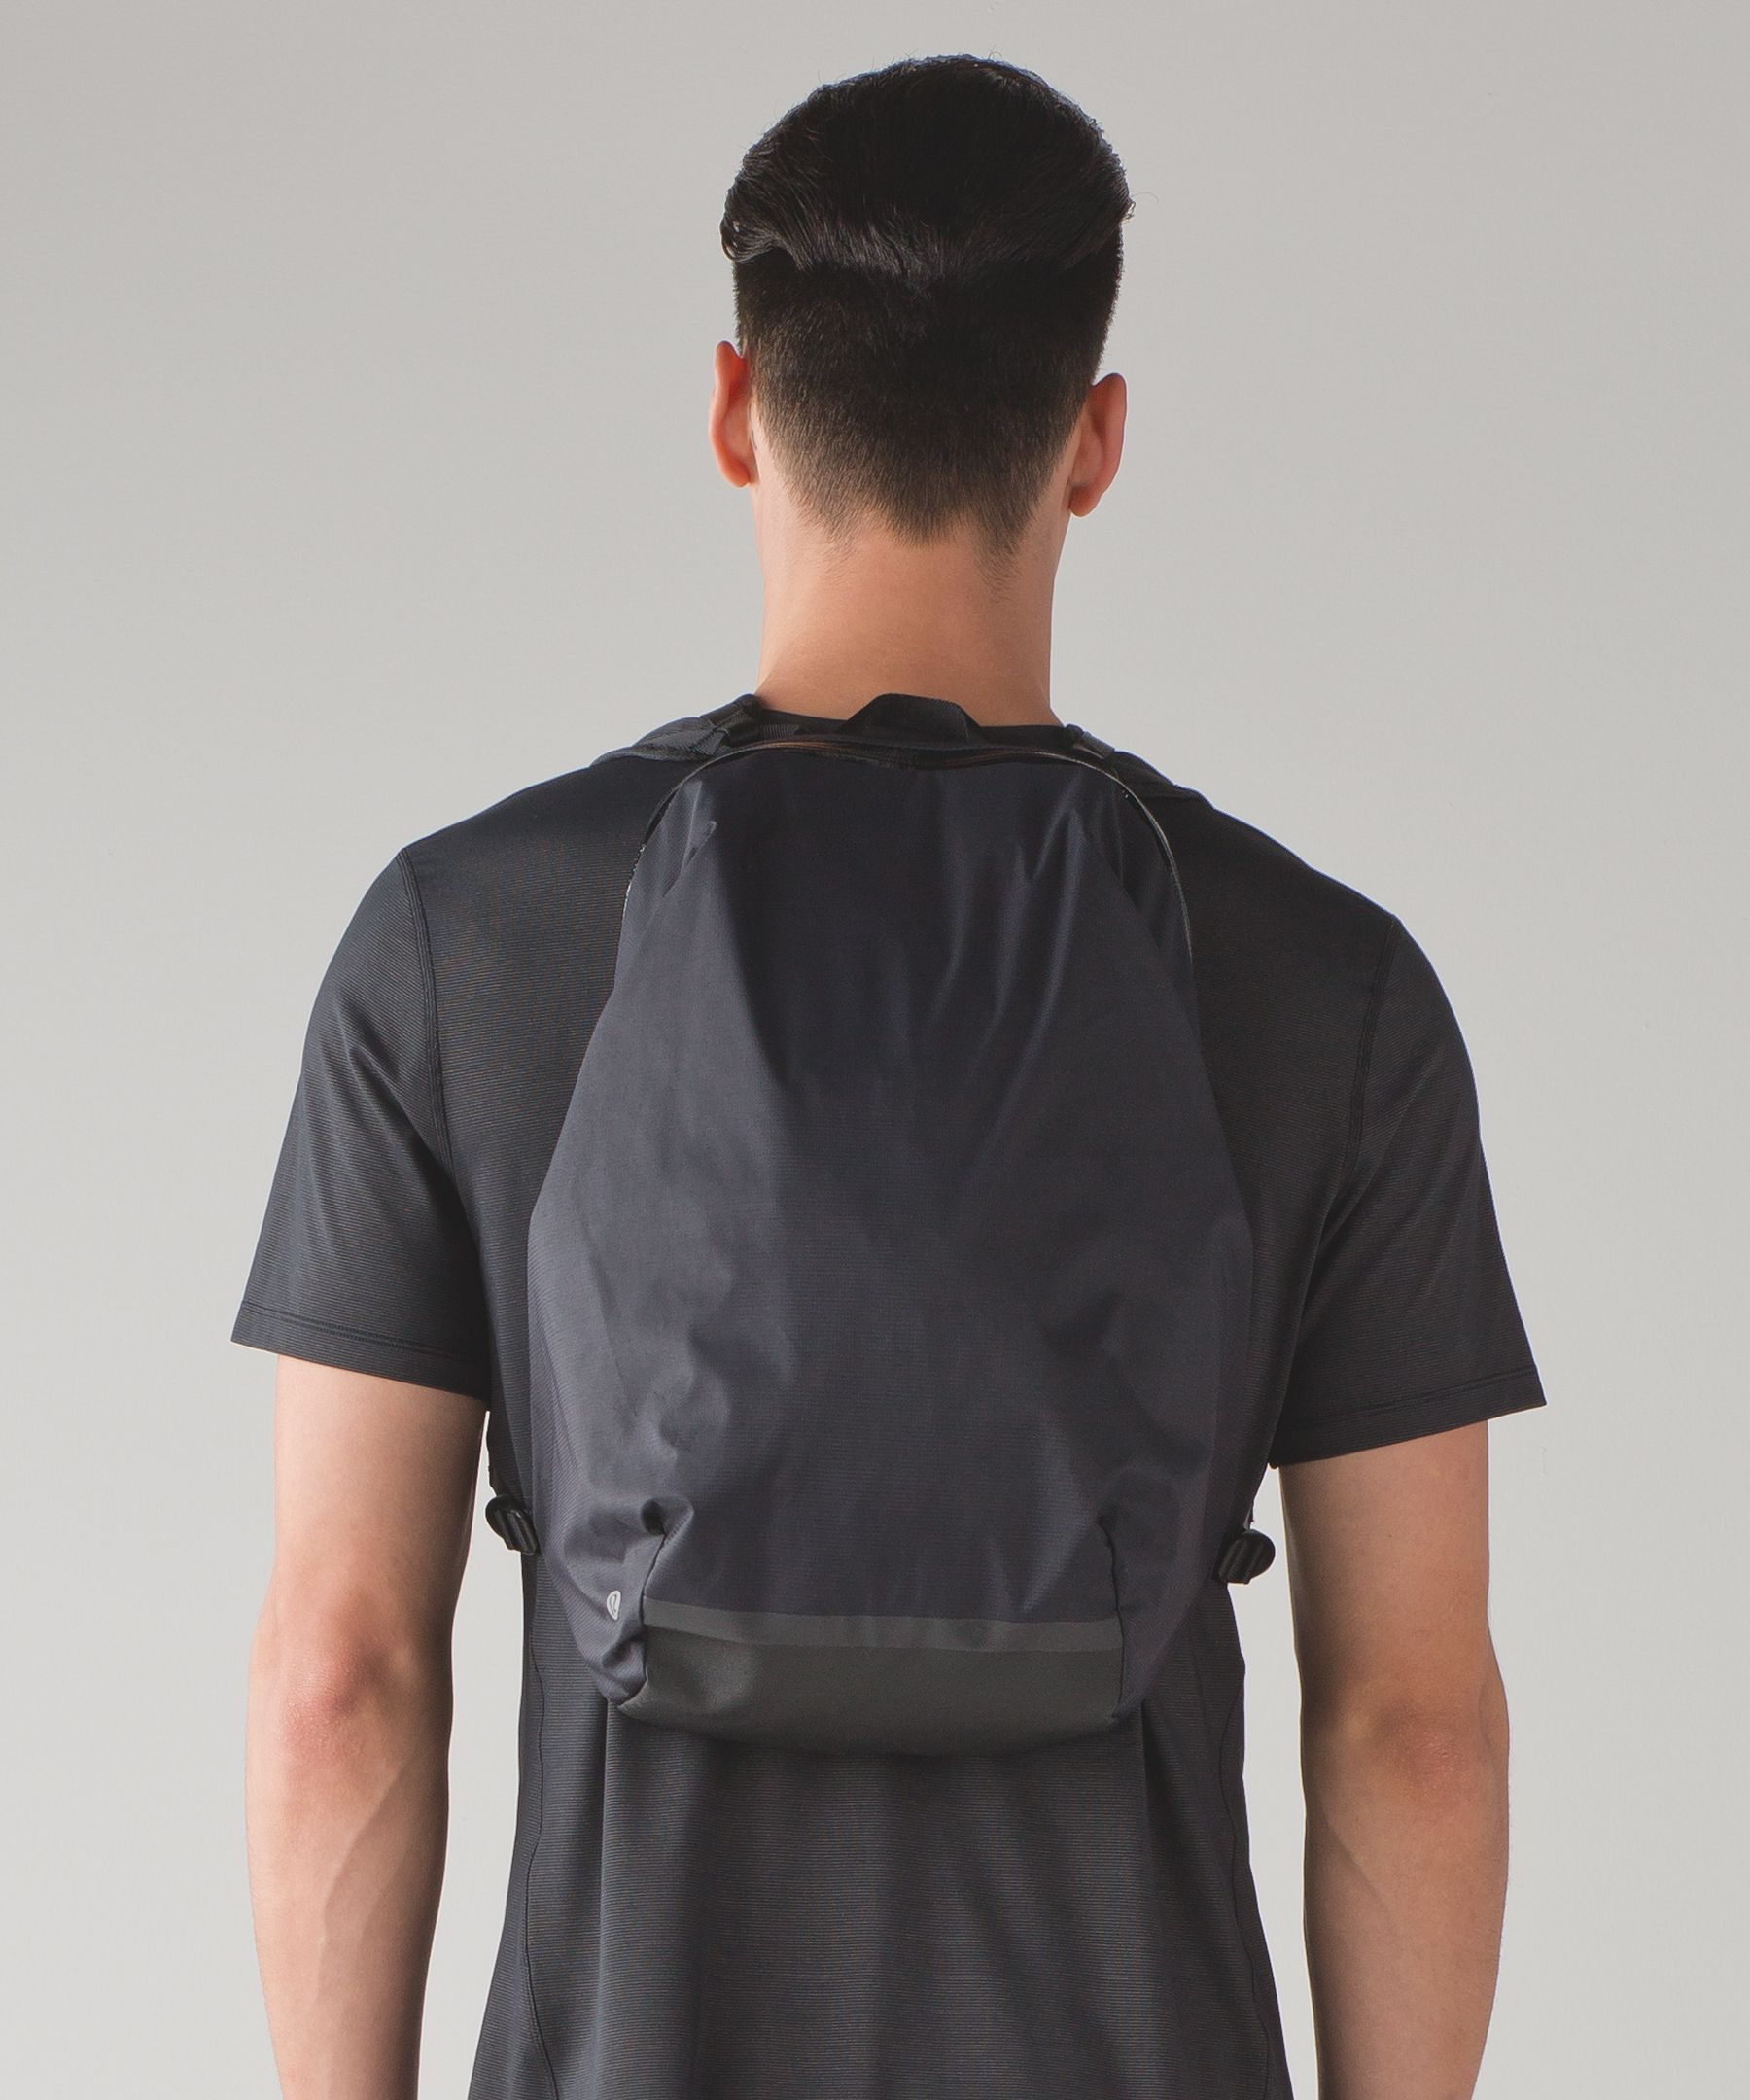 surge run backpack